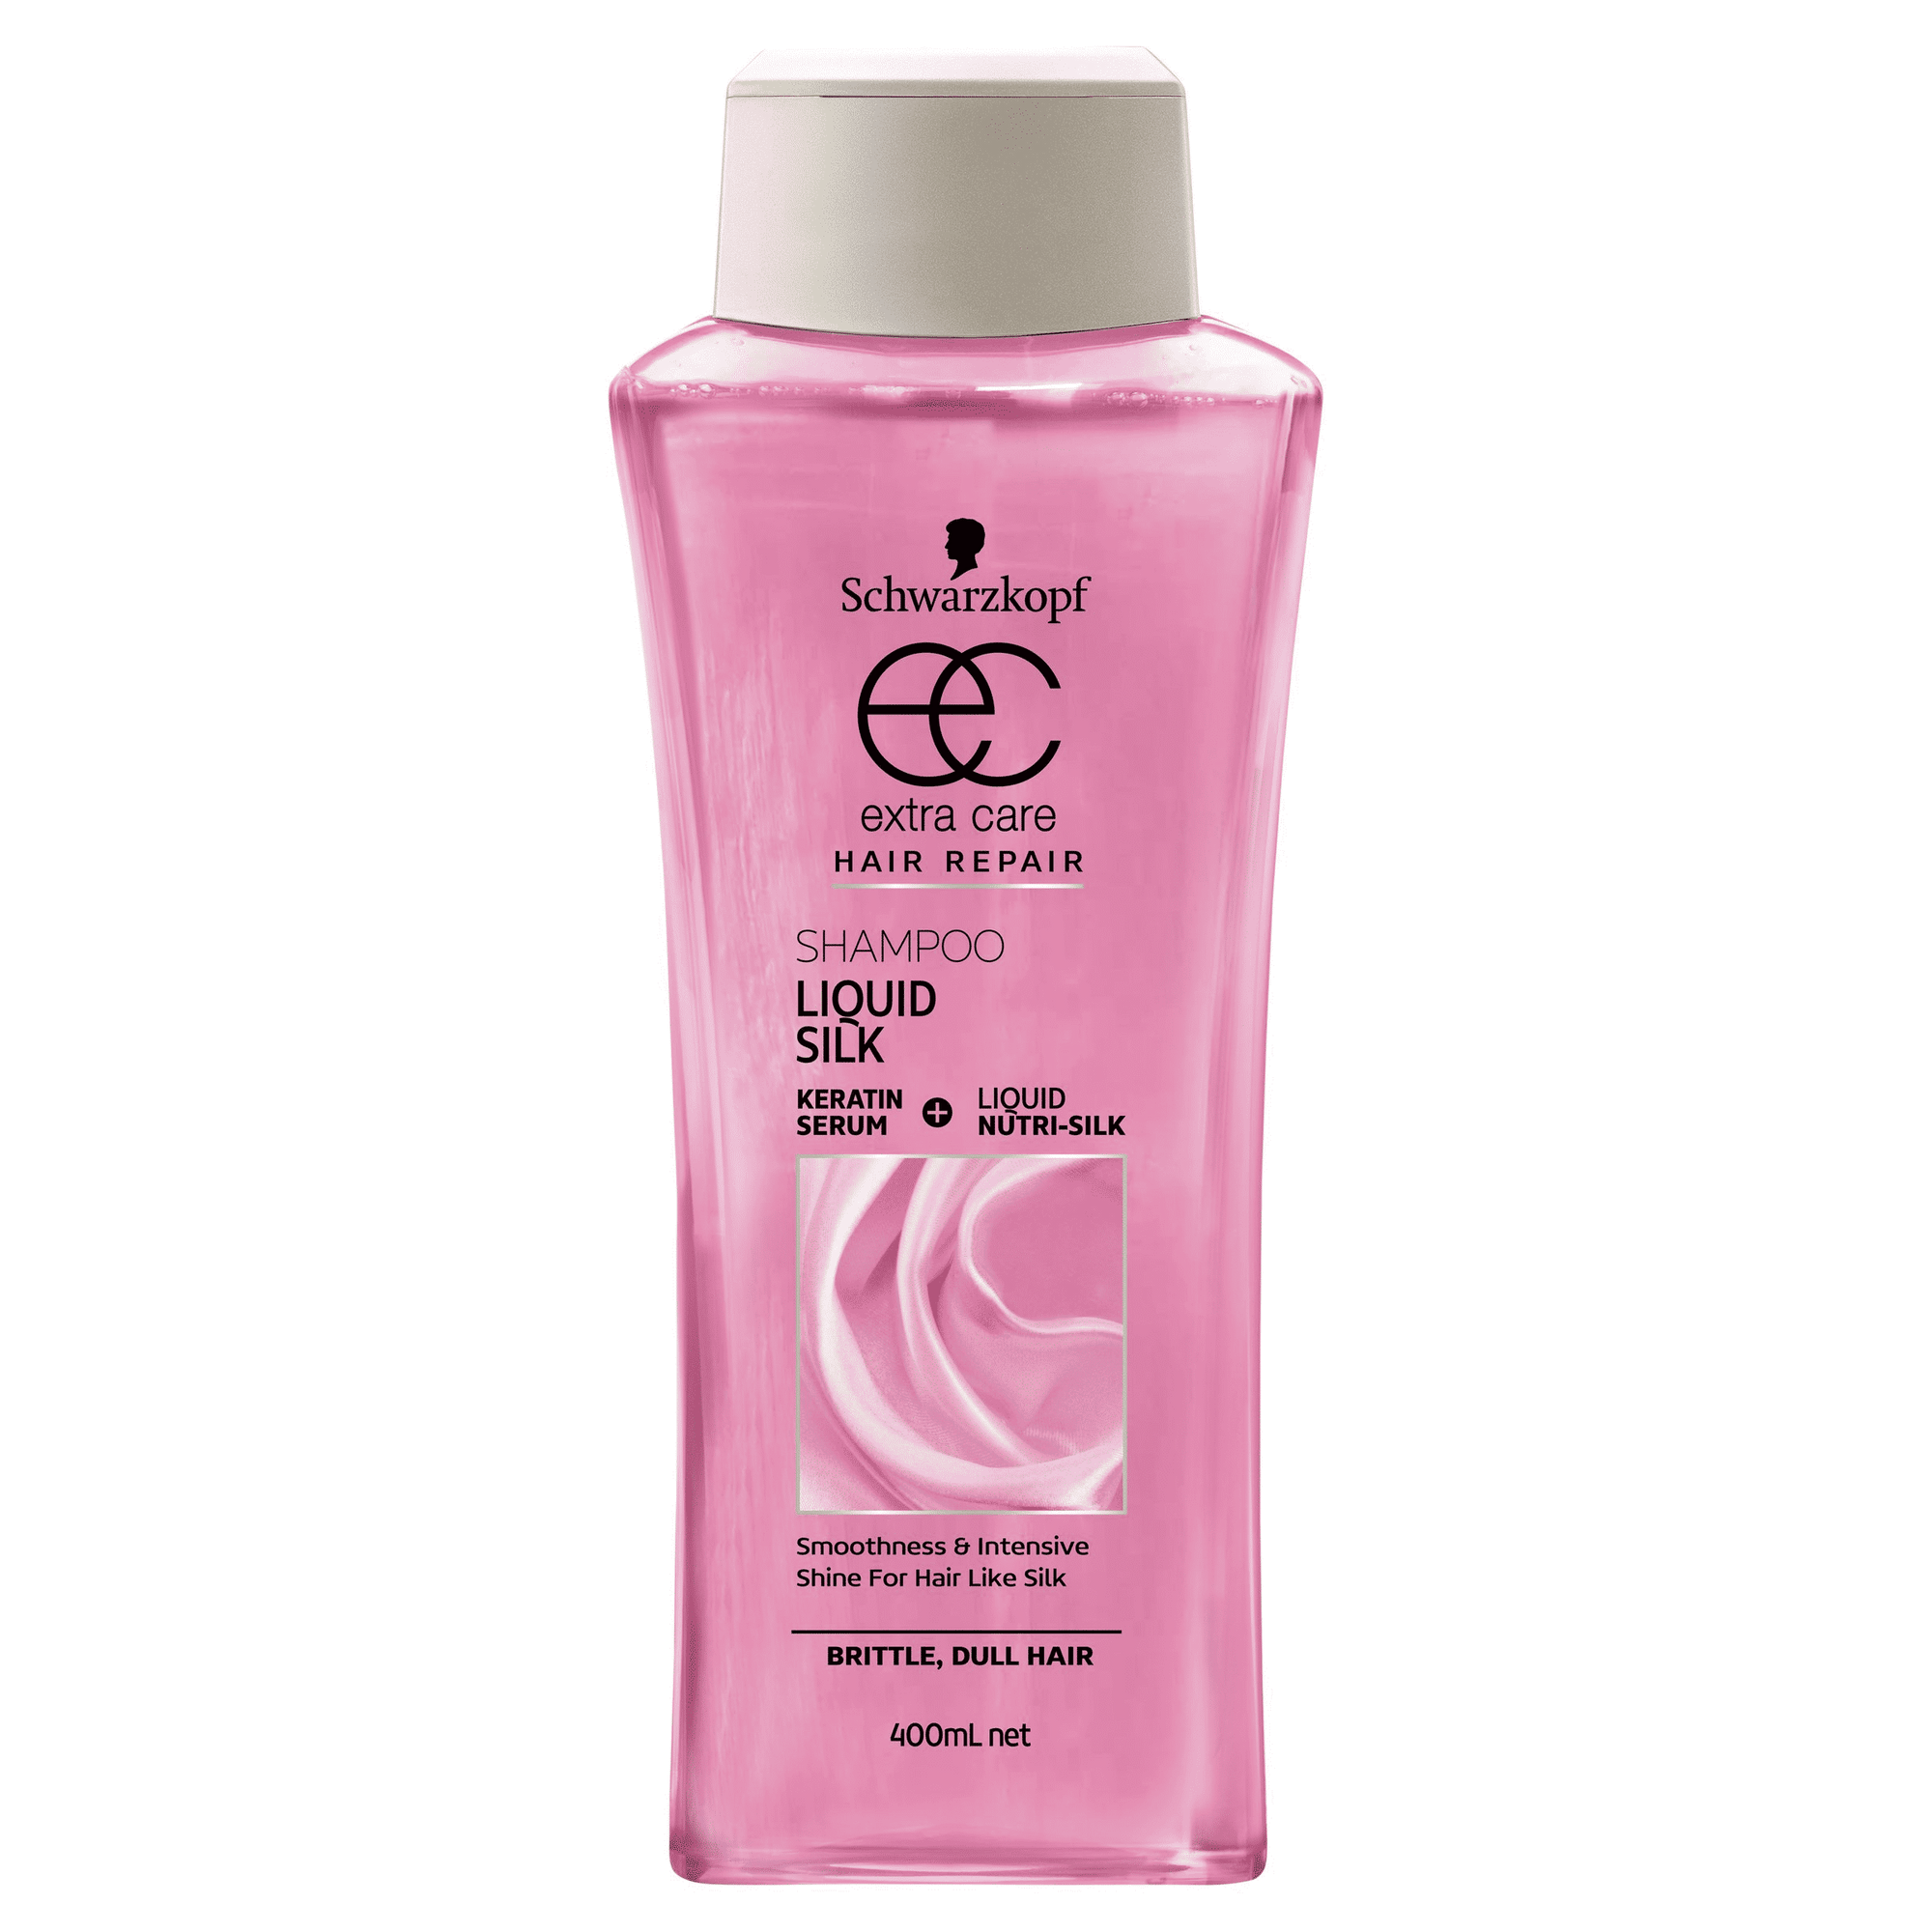 Schwarzkopf Extra Care Shampoo Liquid Silk 400ml